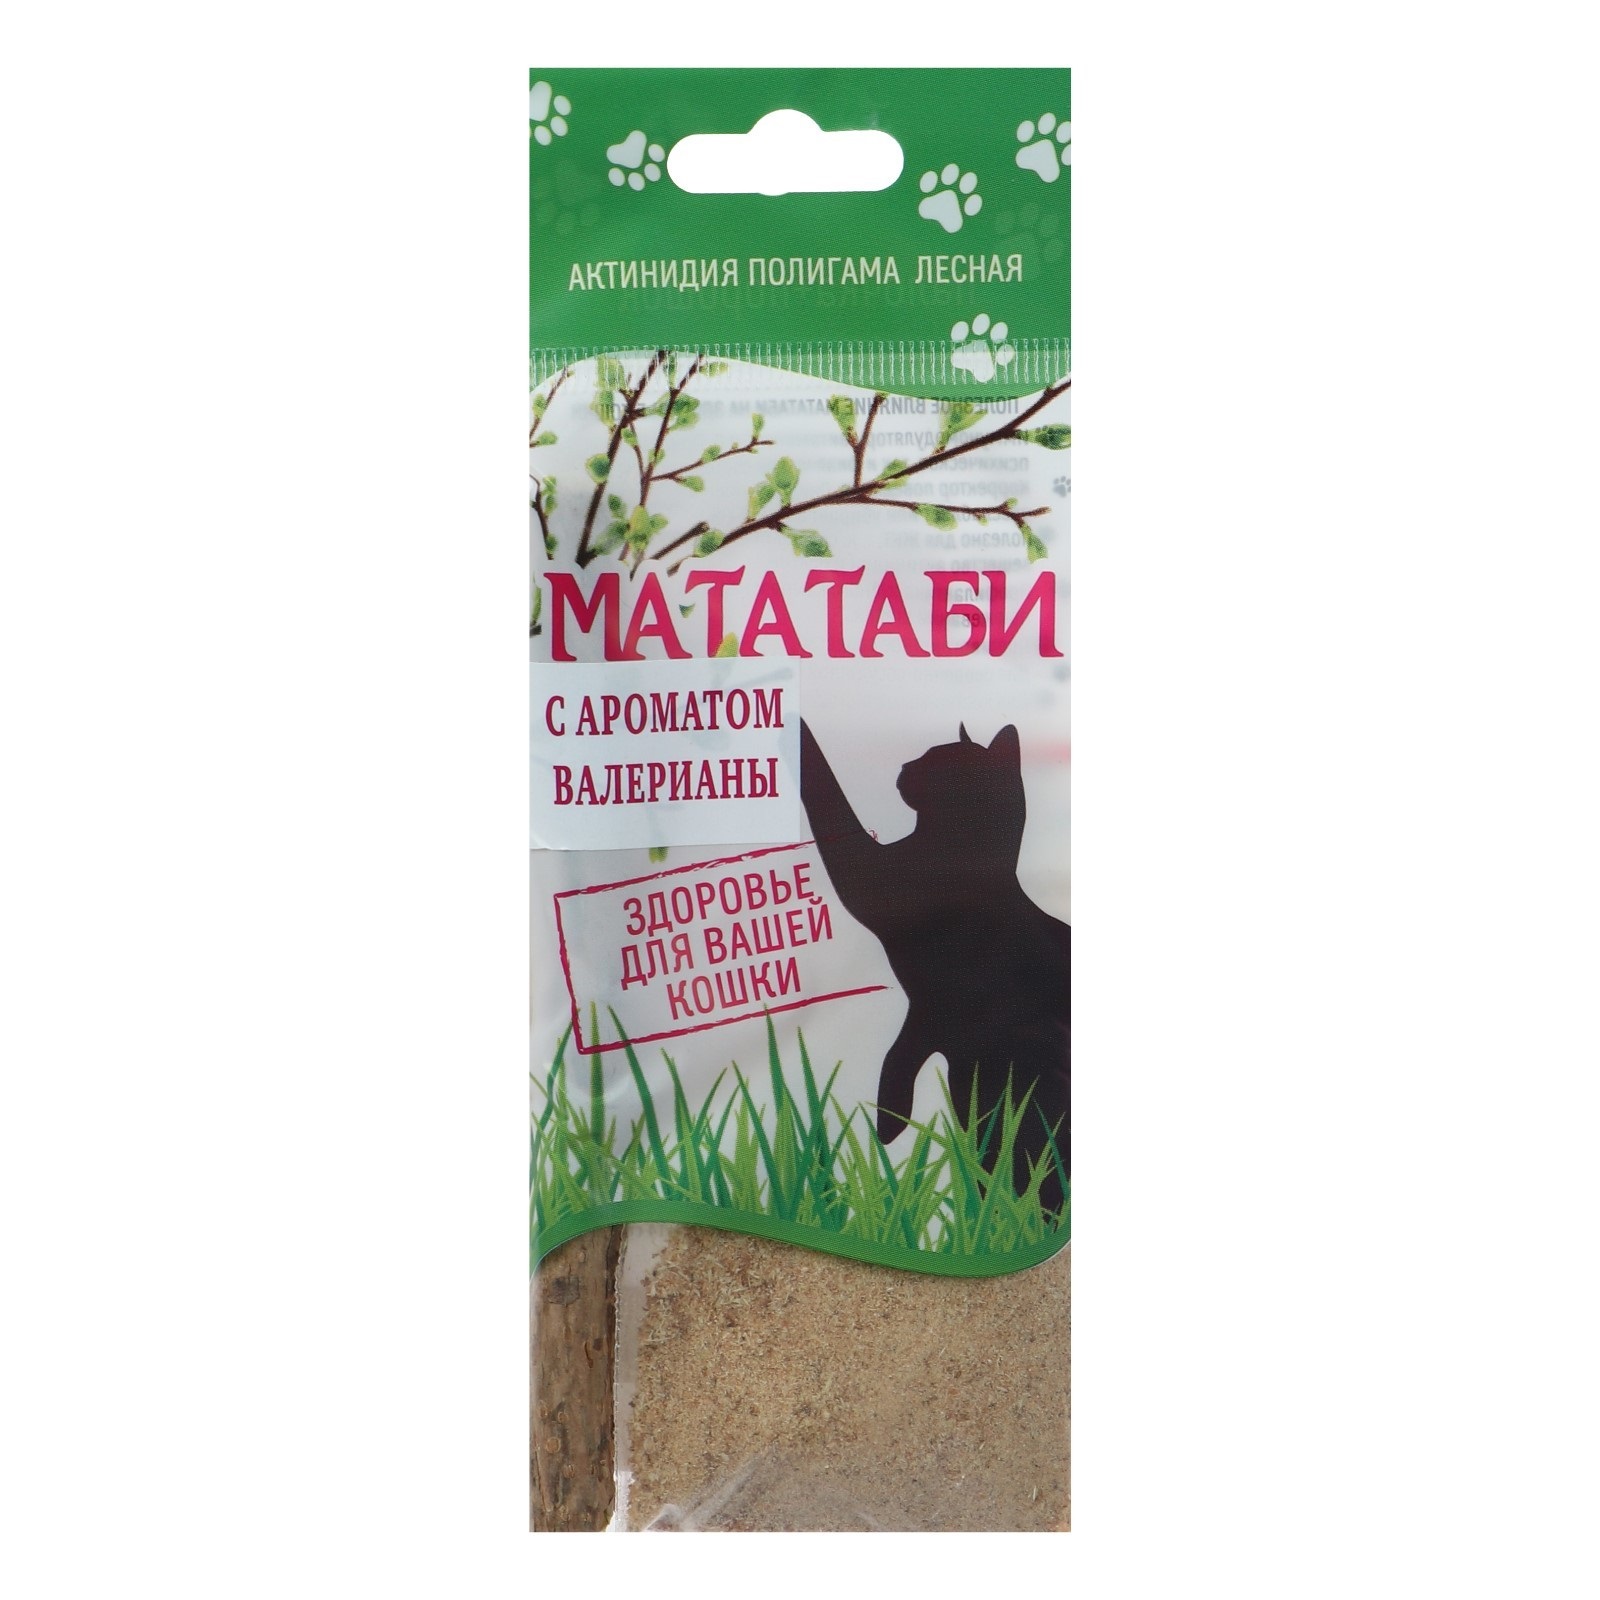 Мататаби с ароматом Валерьяны 5гр